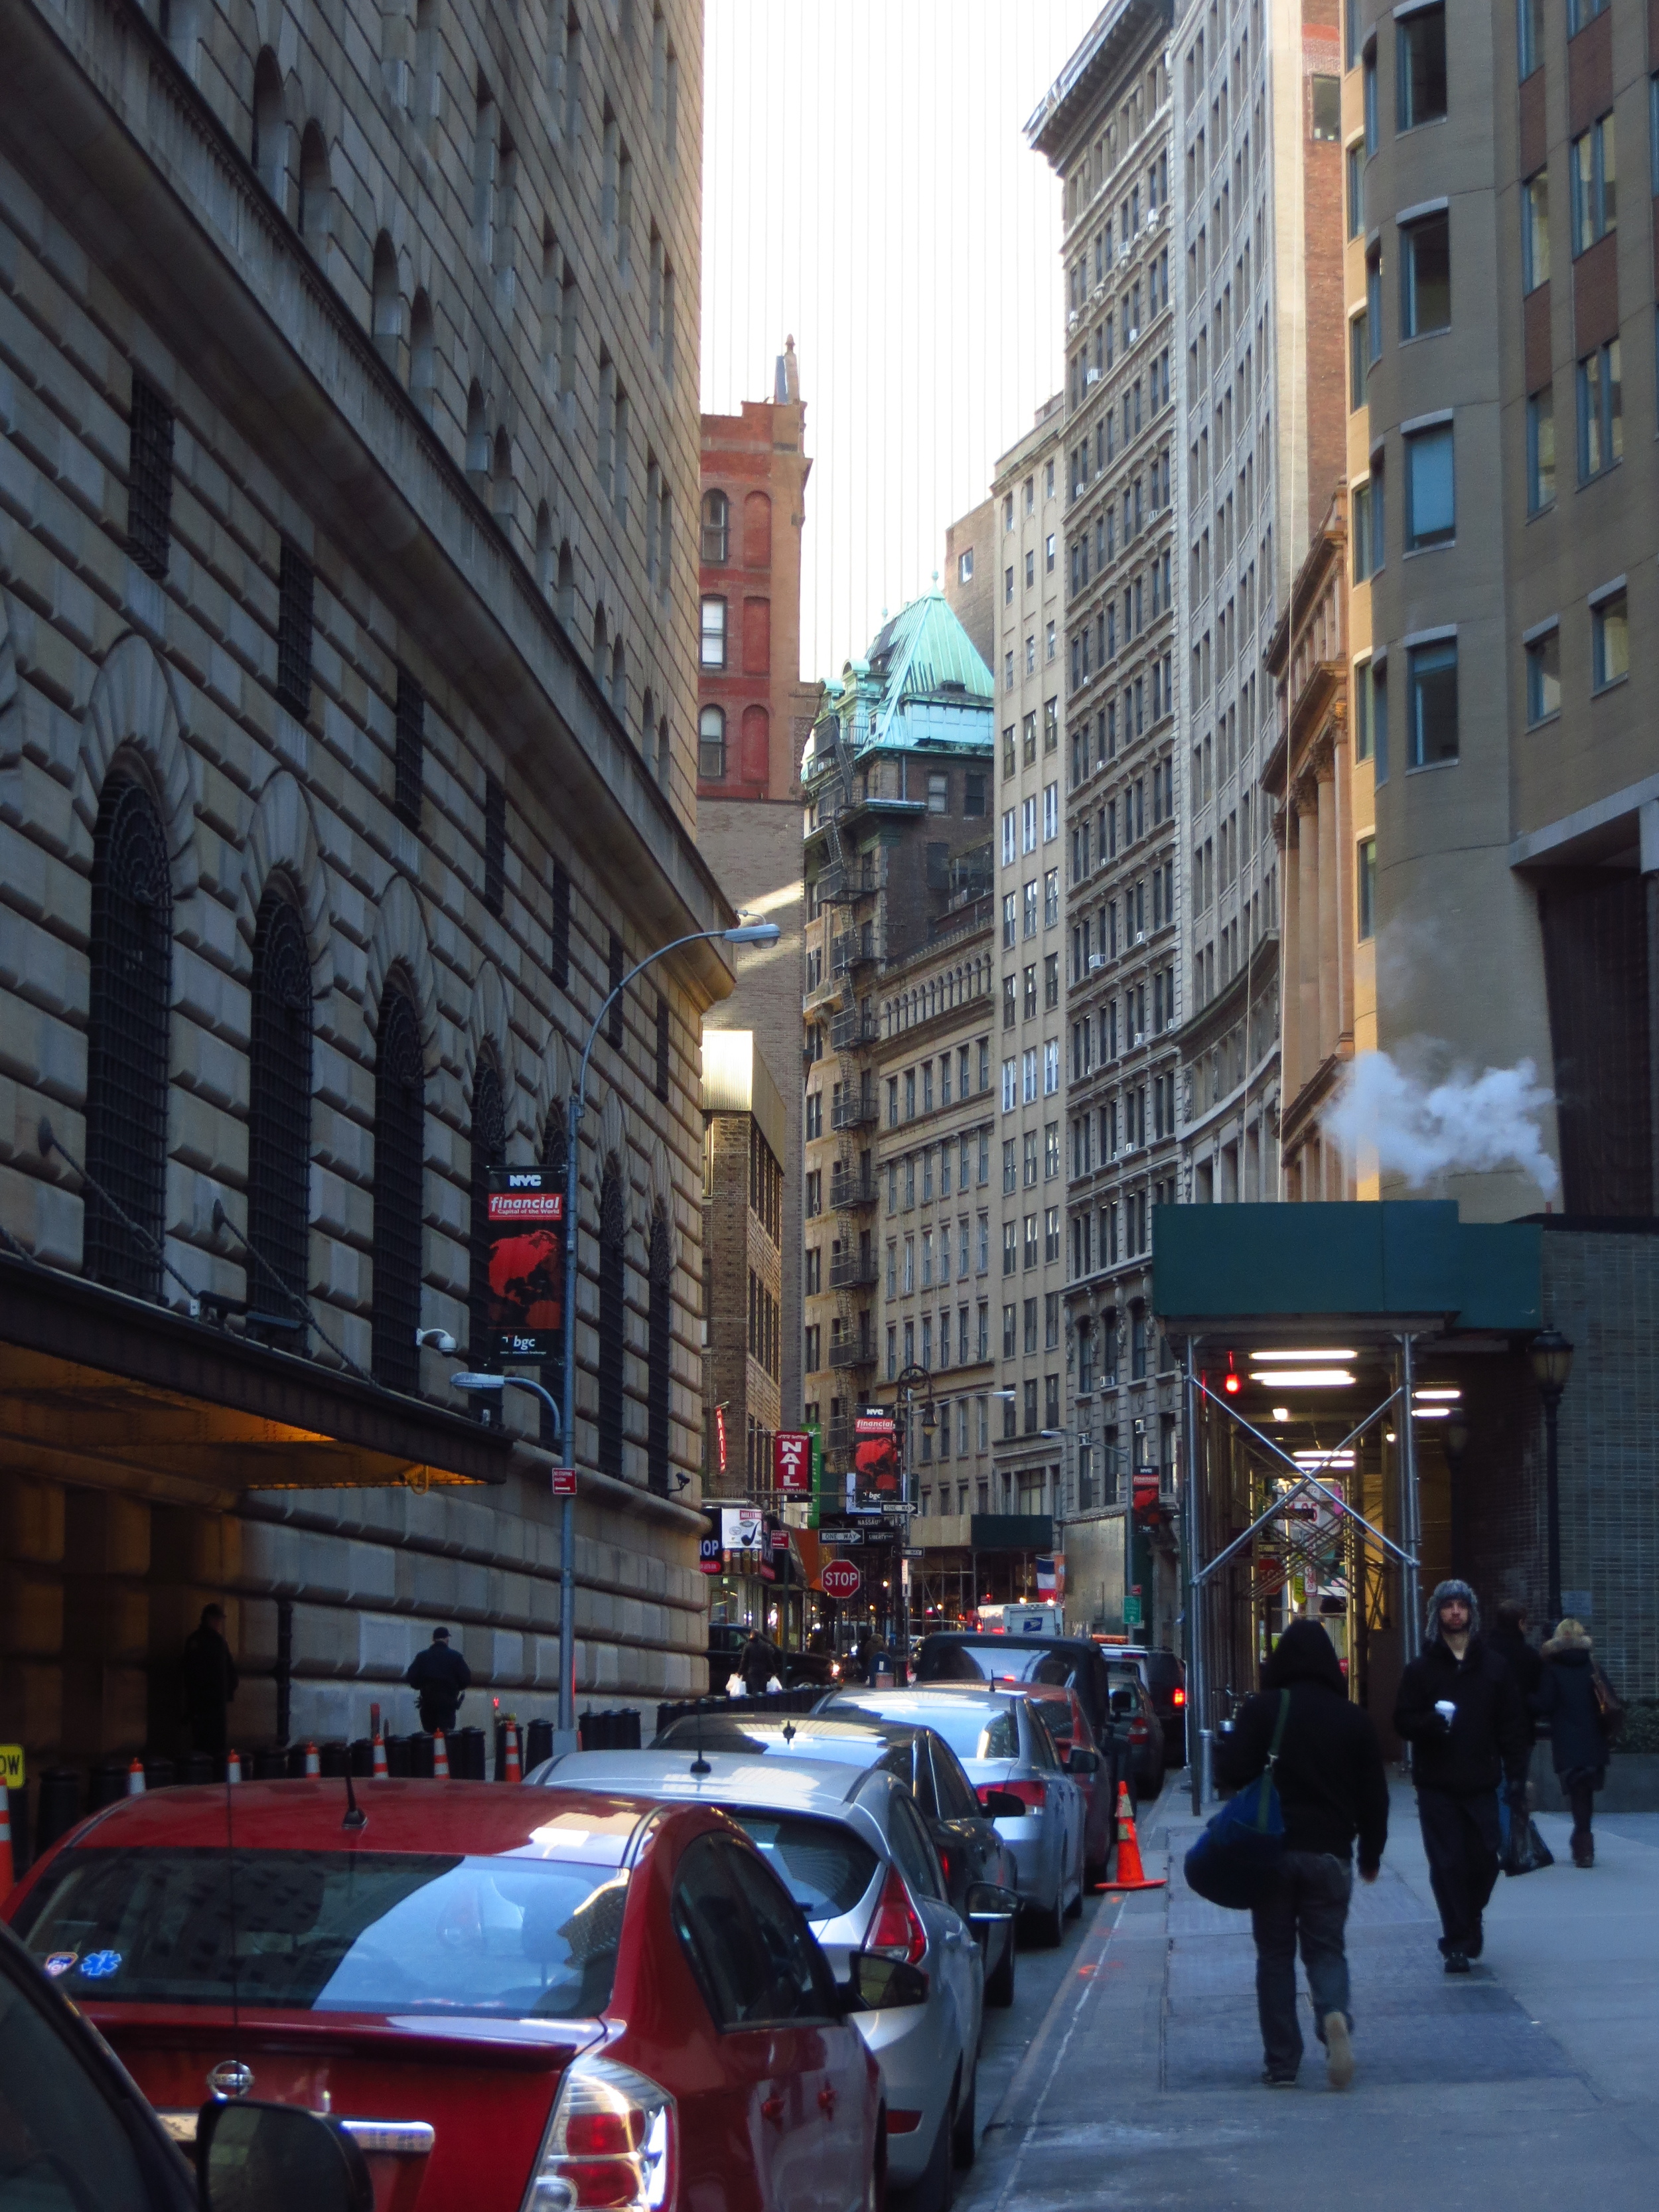 Typical narrow street in lower Manhattan